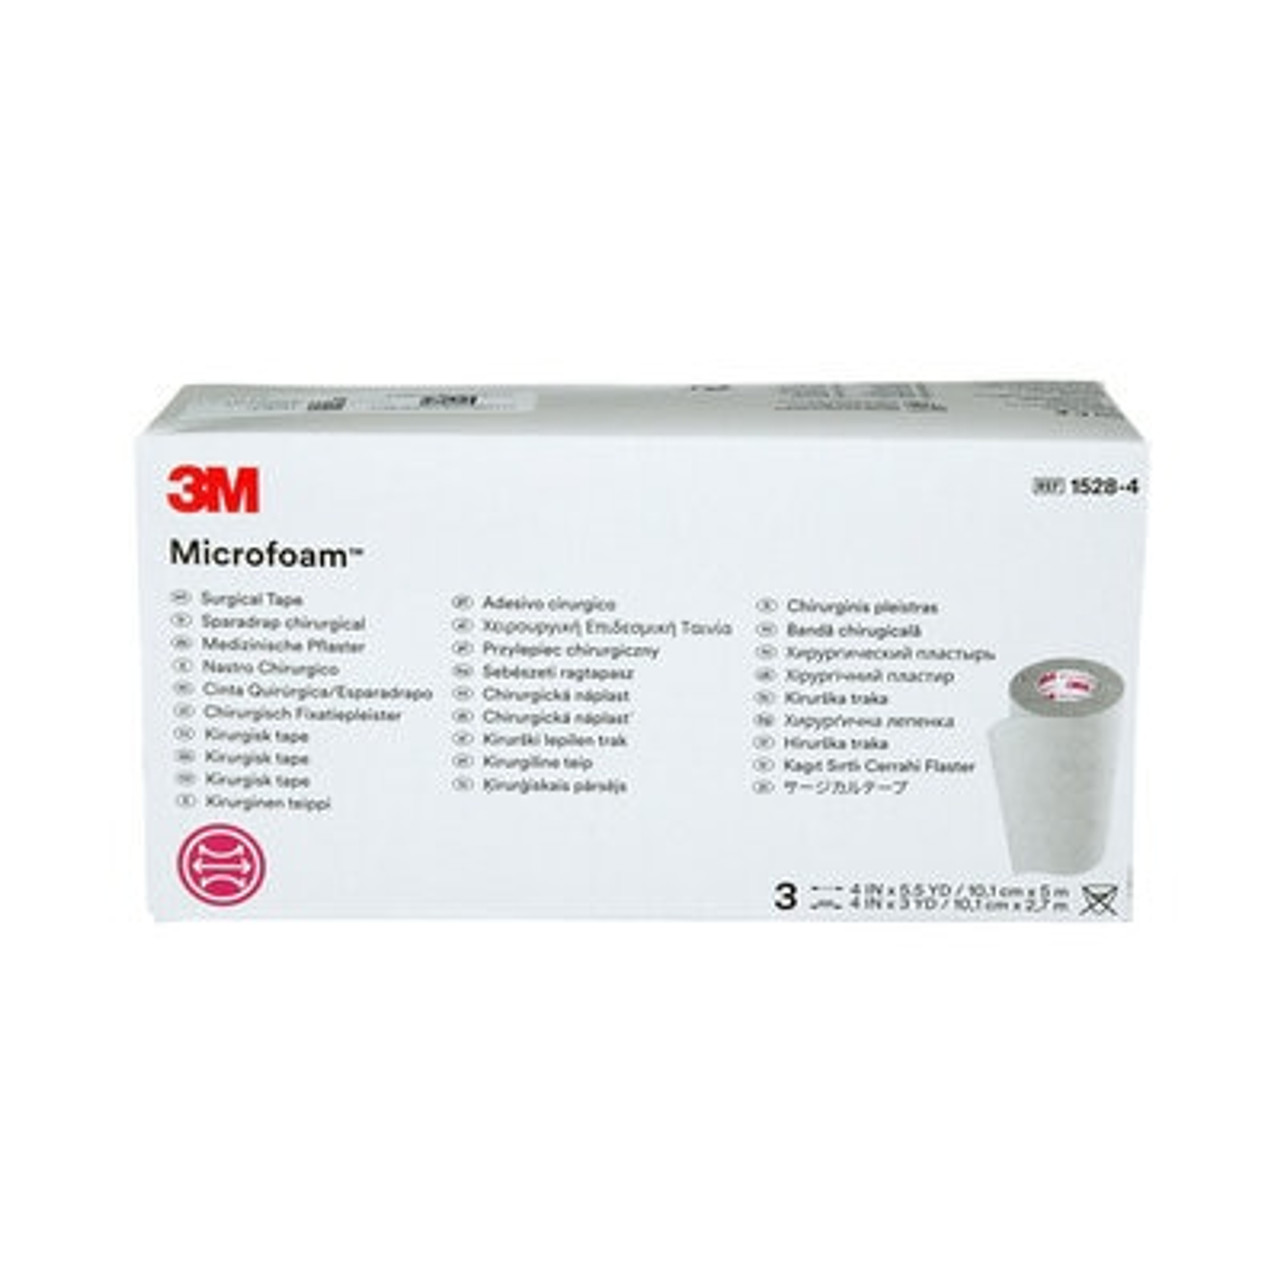 Microfoam Surgical Medical Tape, Elastic Foam Tape, 1 Inch X 5-1/2 Yards,  3M 1528-1 - Each 